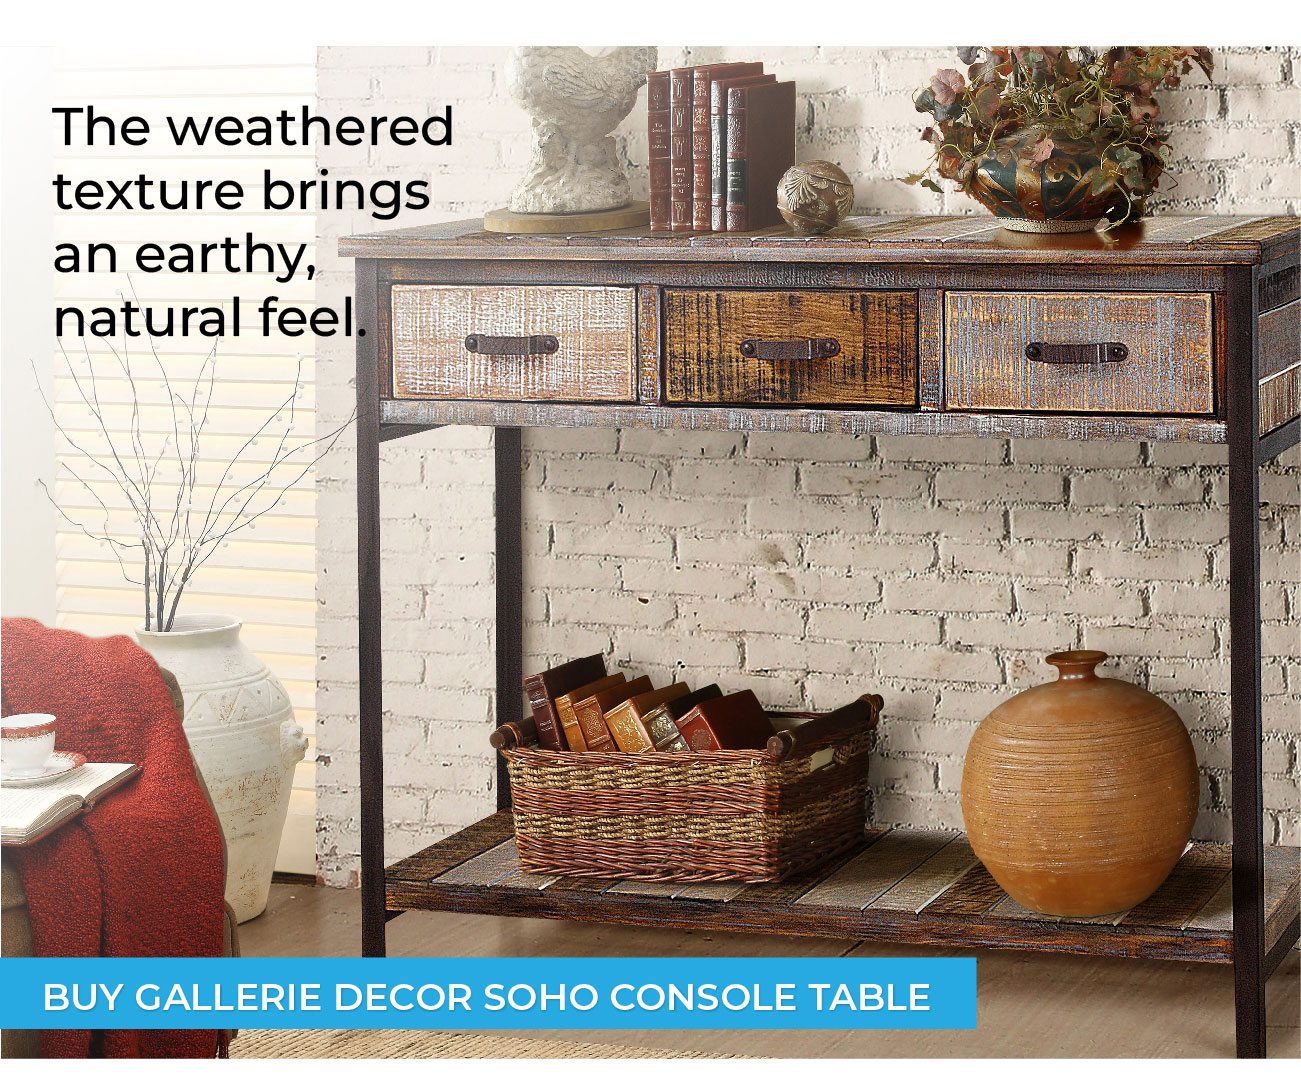 Gallerie Decor Soho Console Table